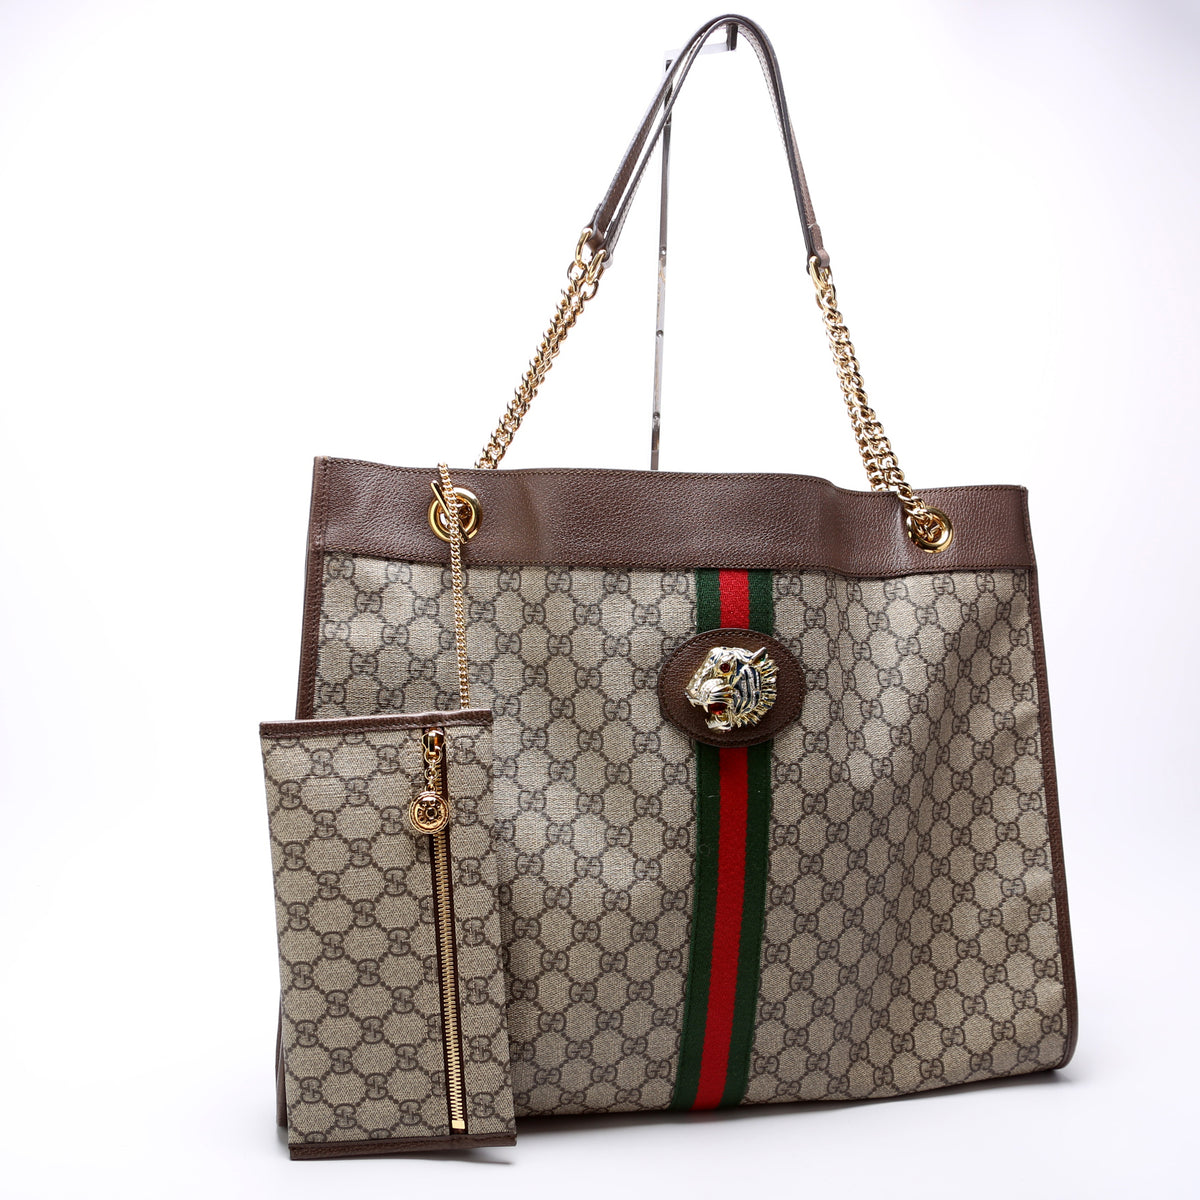 Gucci Rajah Gg Supreme Leather Large Chain Shoulder Bag 537219